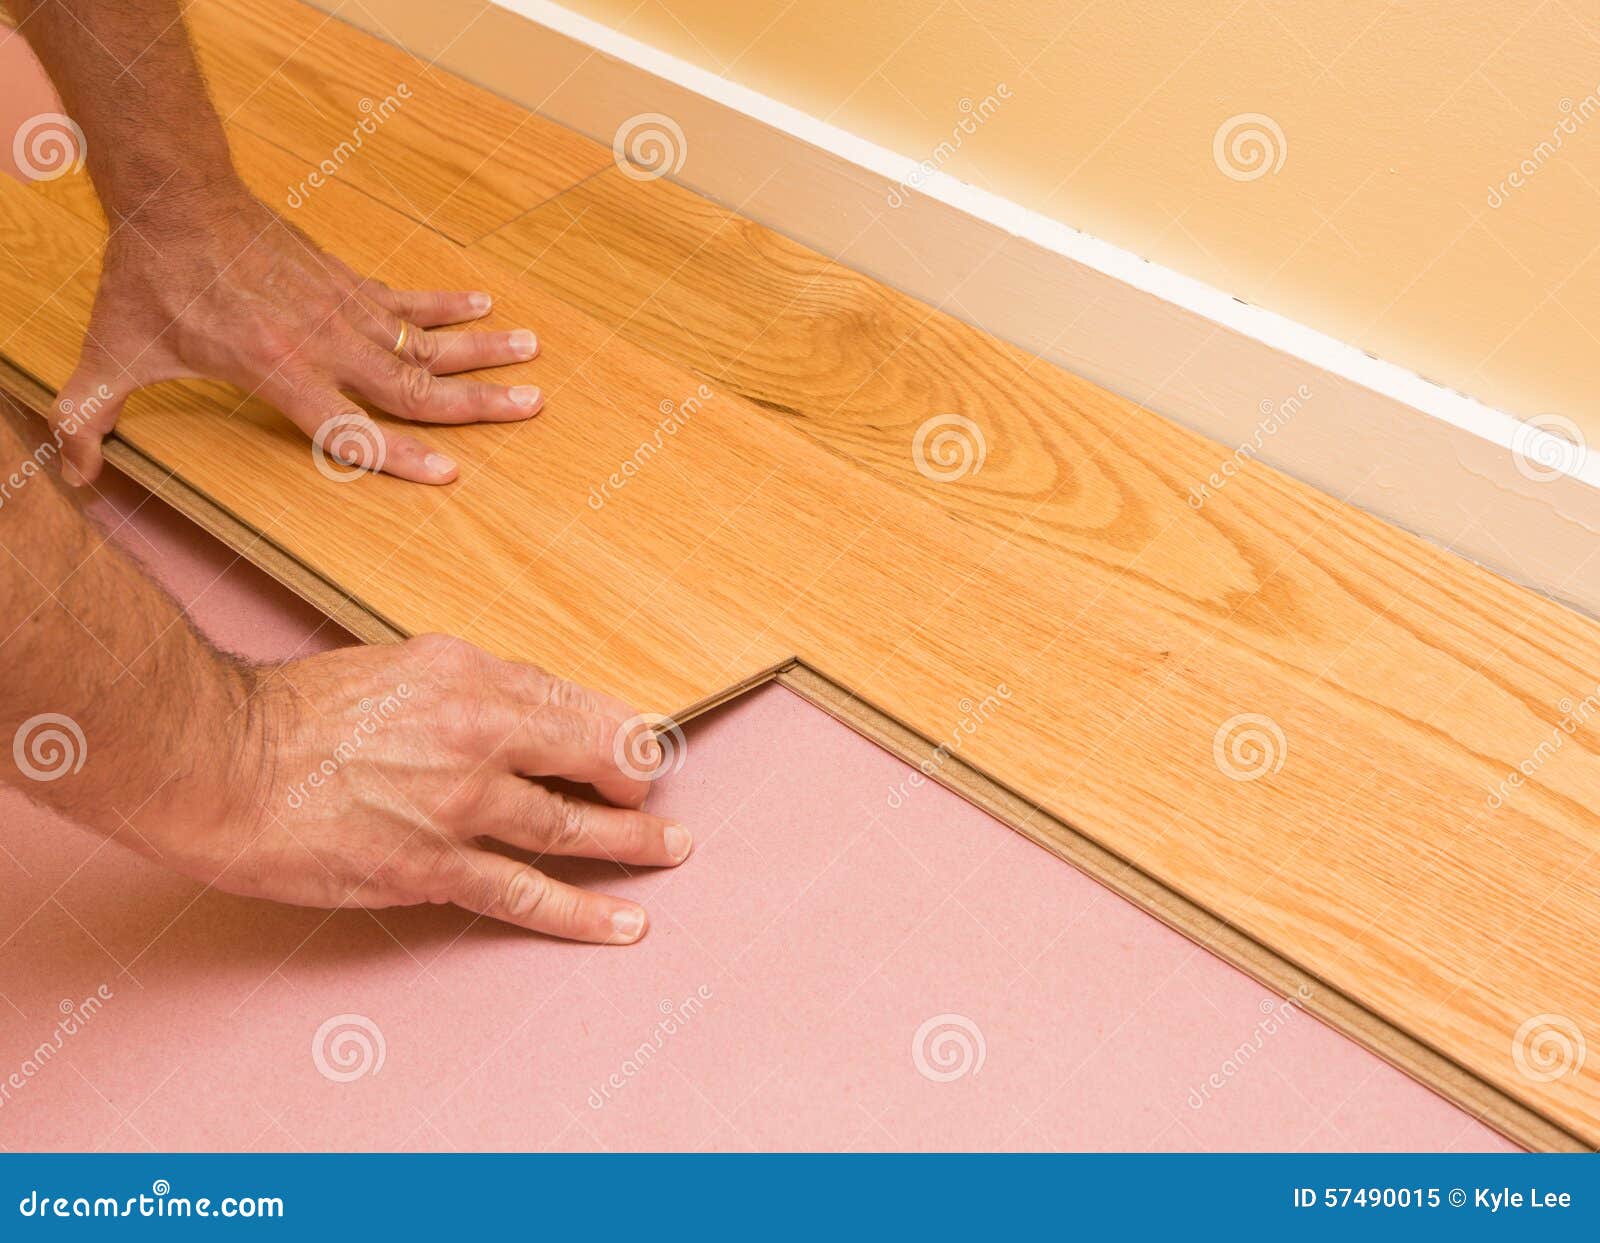 Installing Engineered Hardwood Floor Stock Image - Image of fitting,  handyman: 57490015